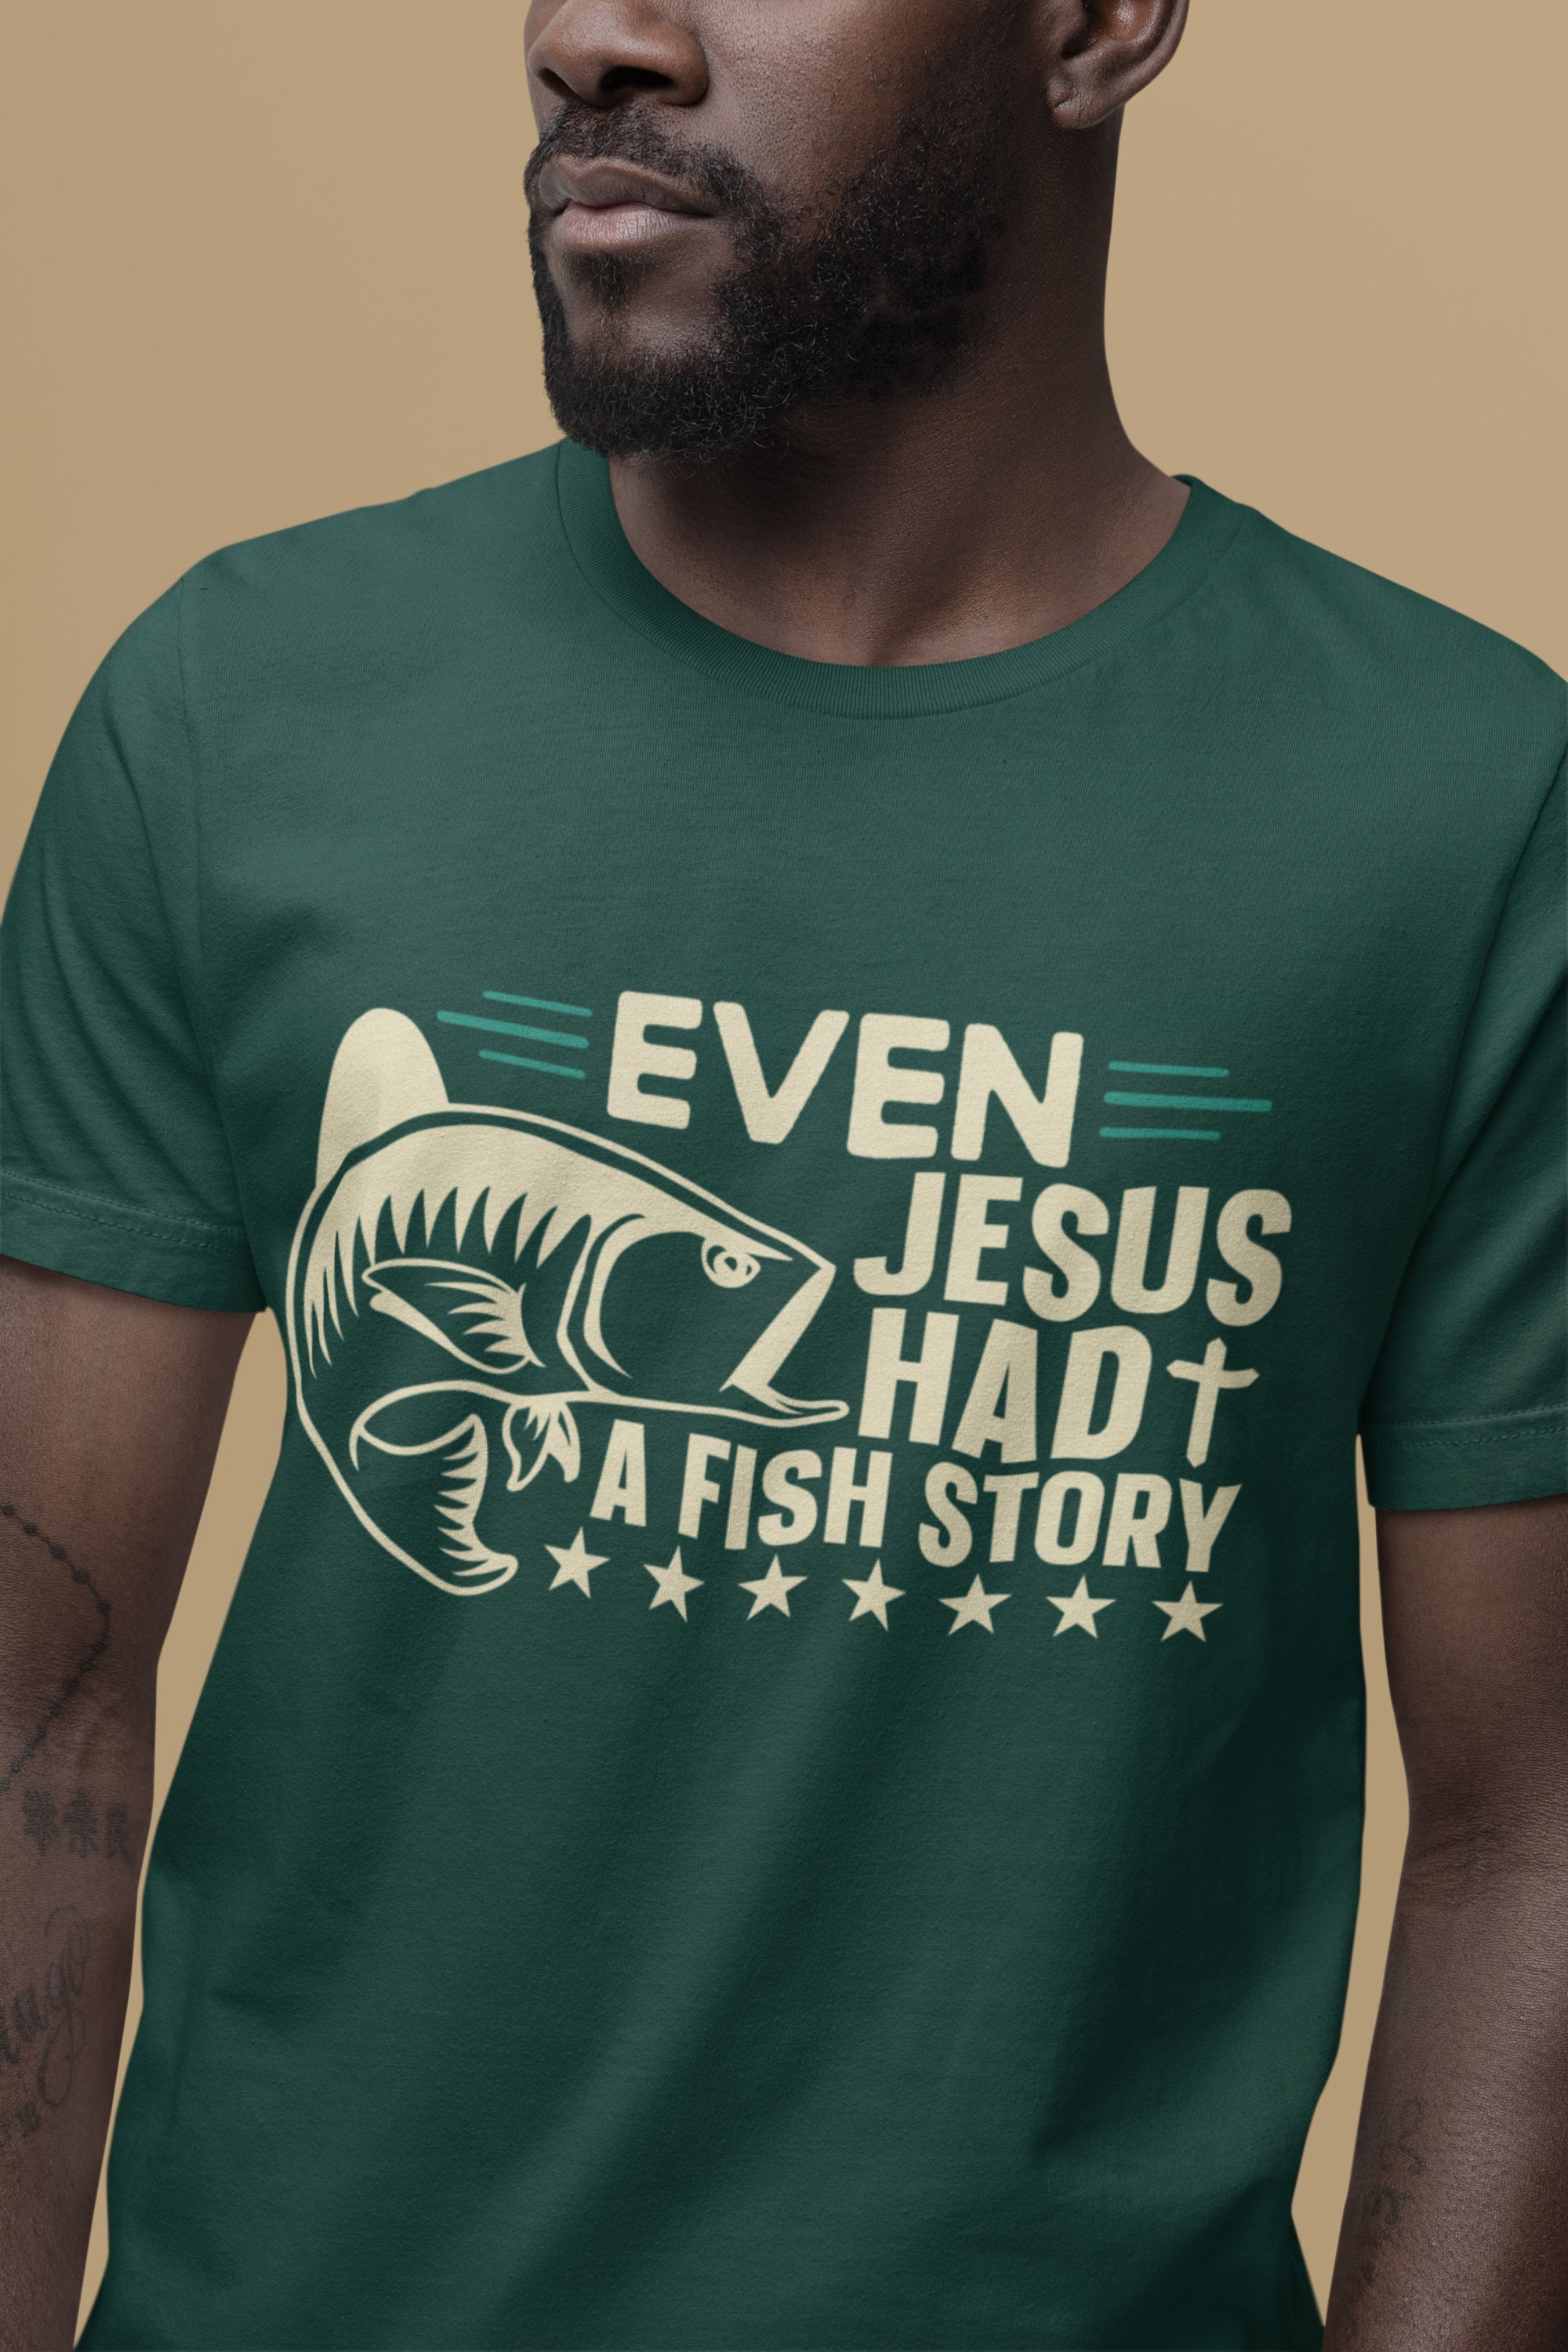 Mens Christian Shirt, Mens Christian Gifts, Male Christian Shirt